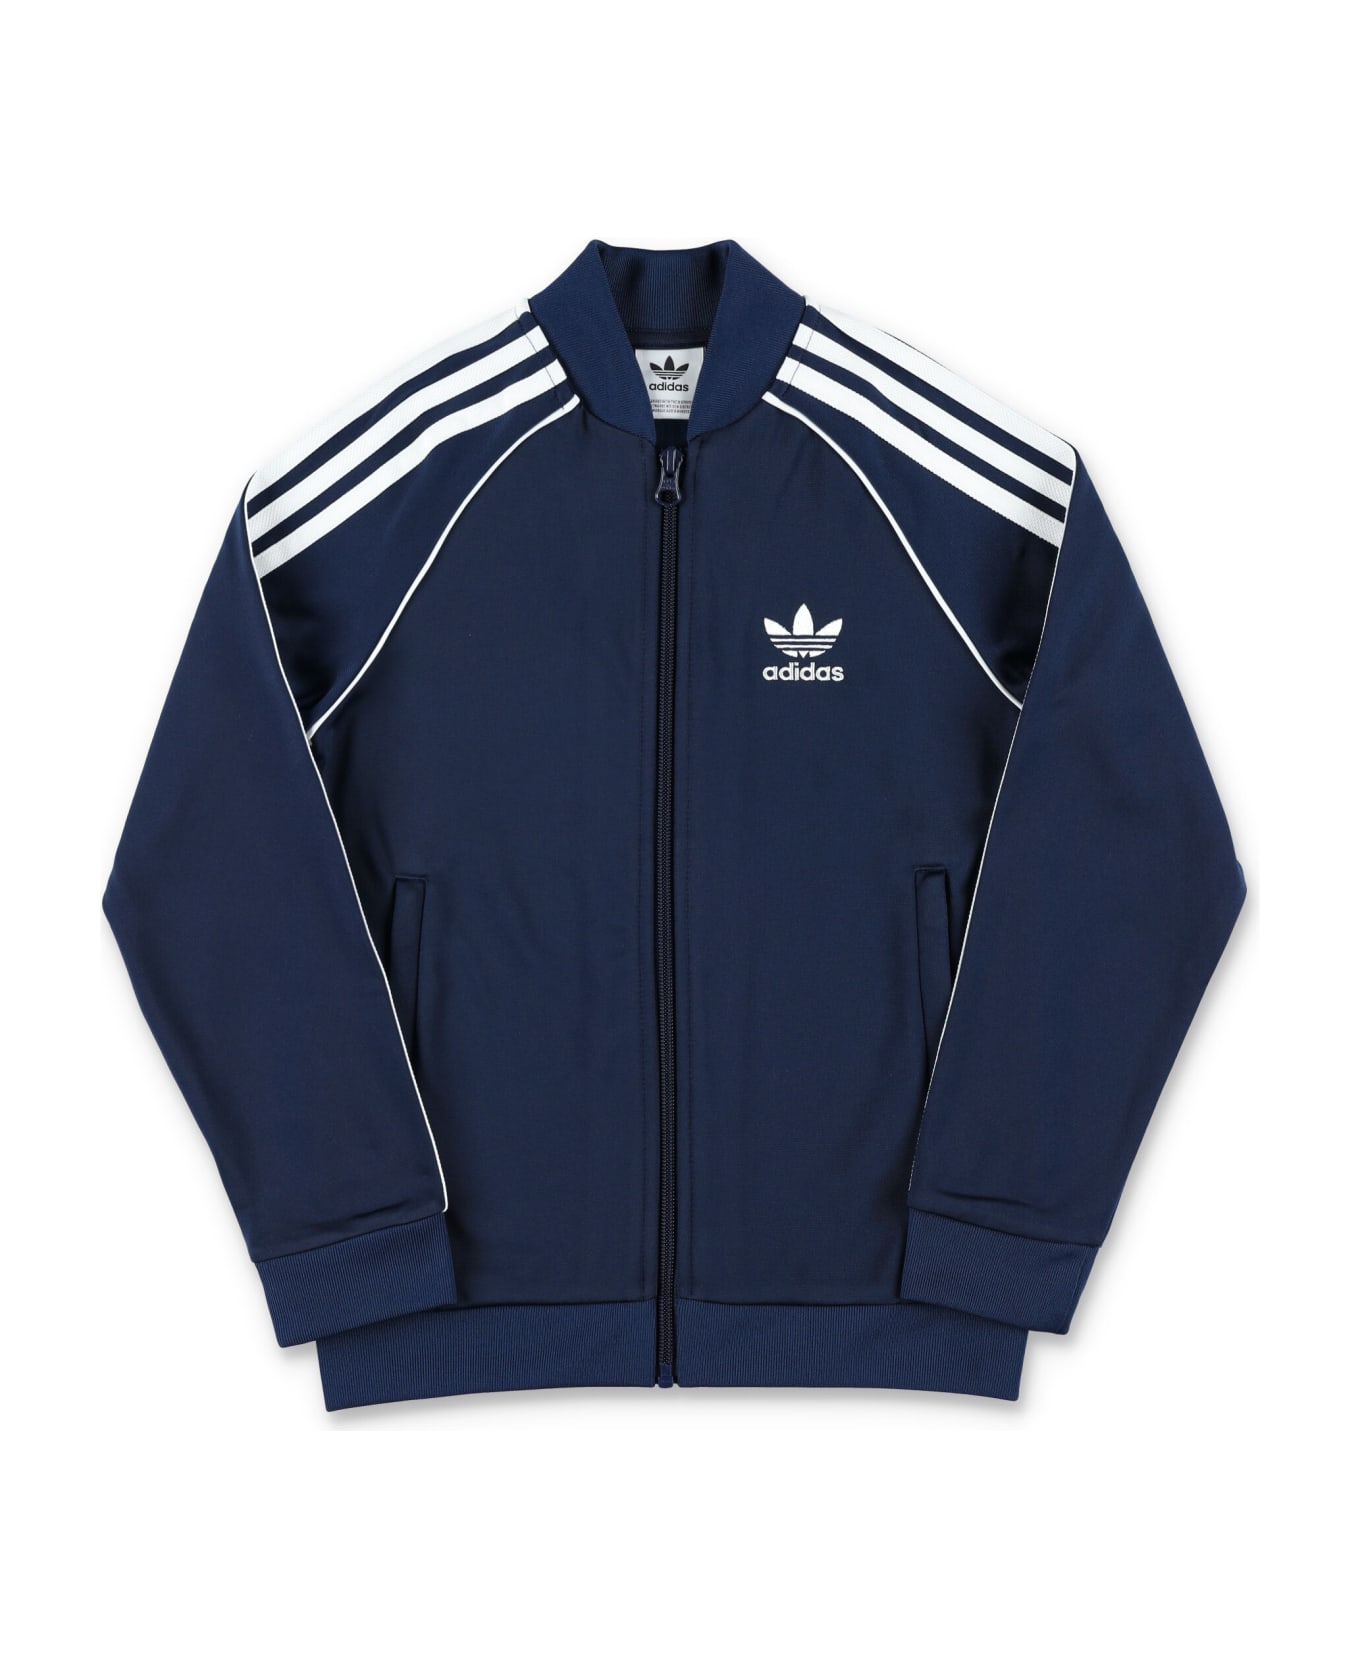 Adidas Originals Track Top Jacket - BLUE